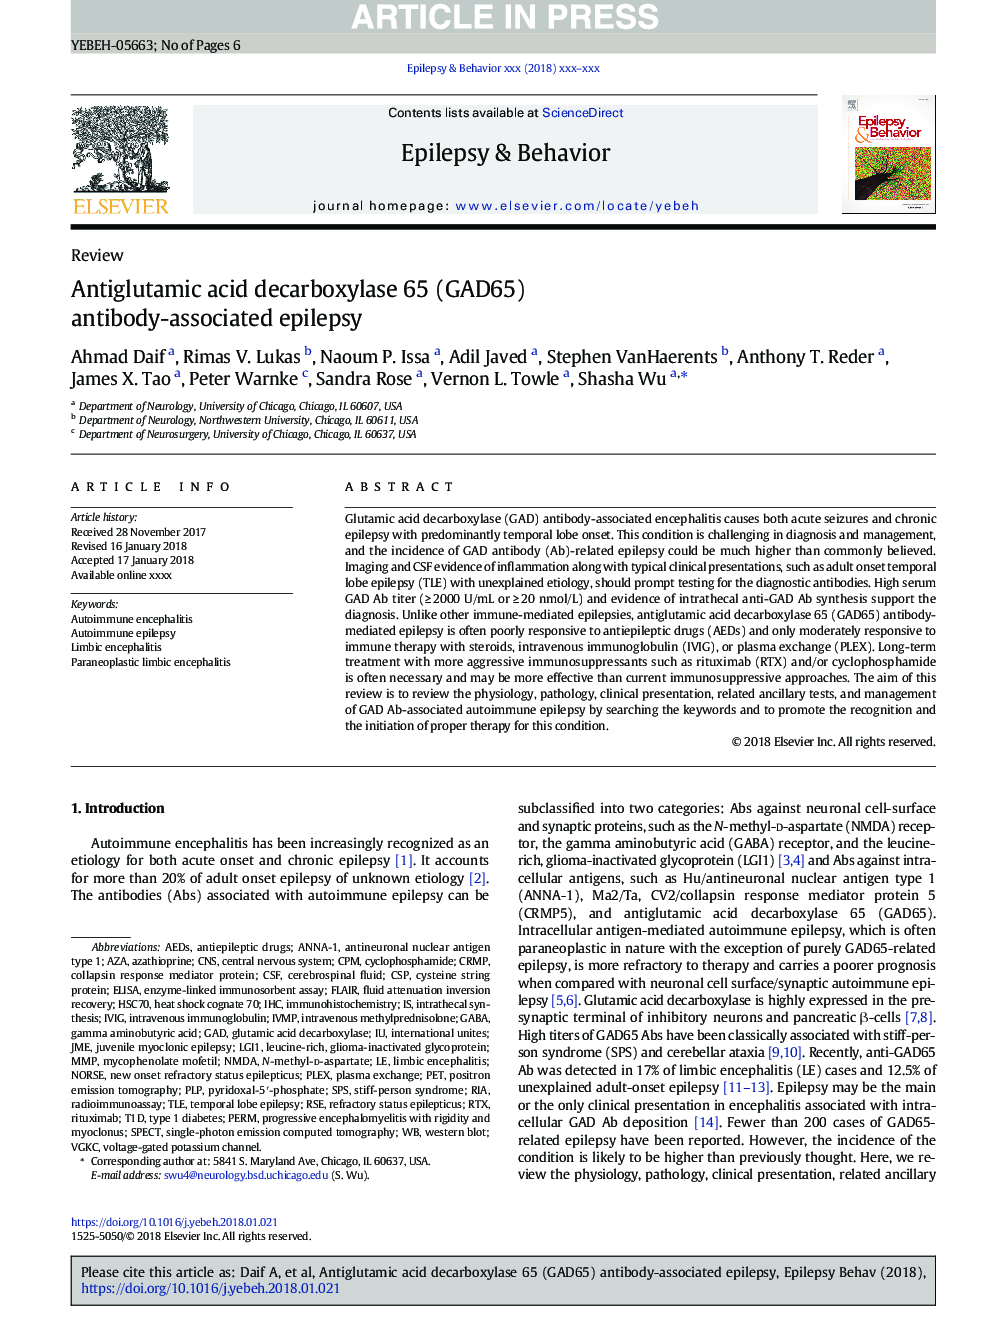 Antiglutamic acid decarboxylase 65 (GAD65) antibody-associated epilepsy